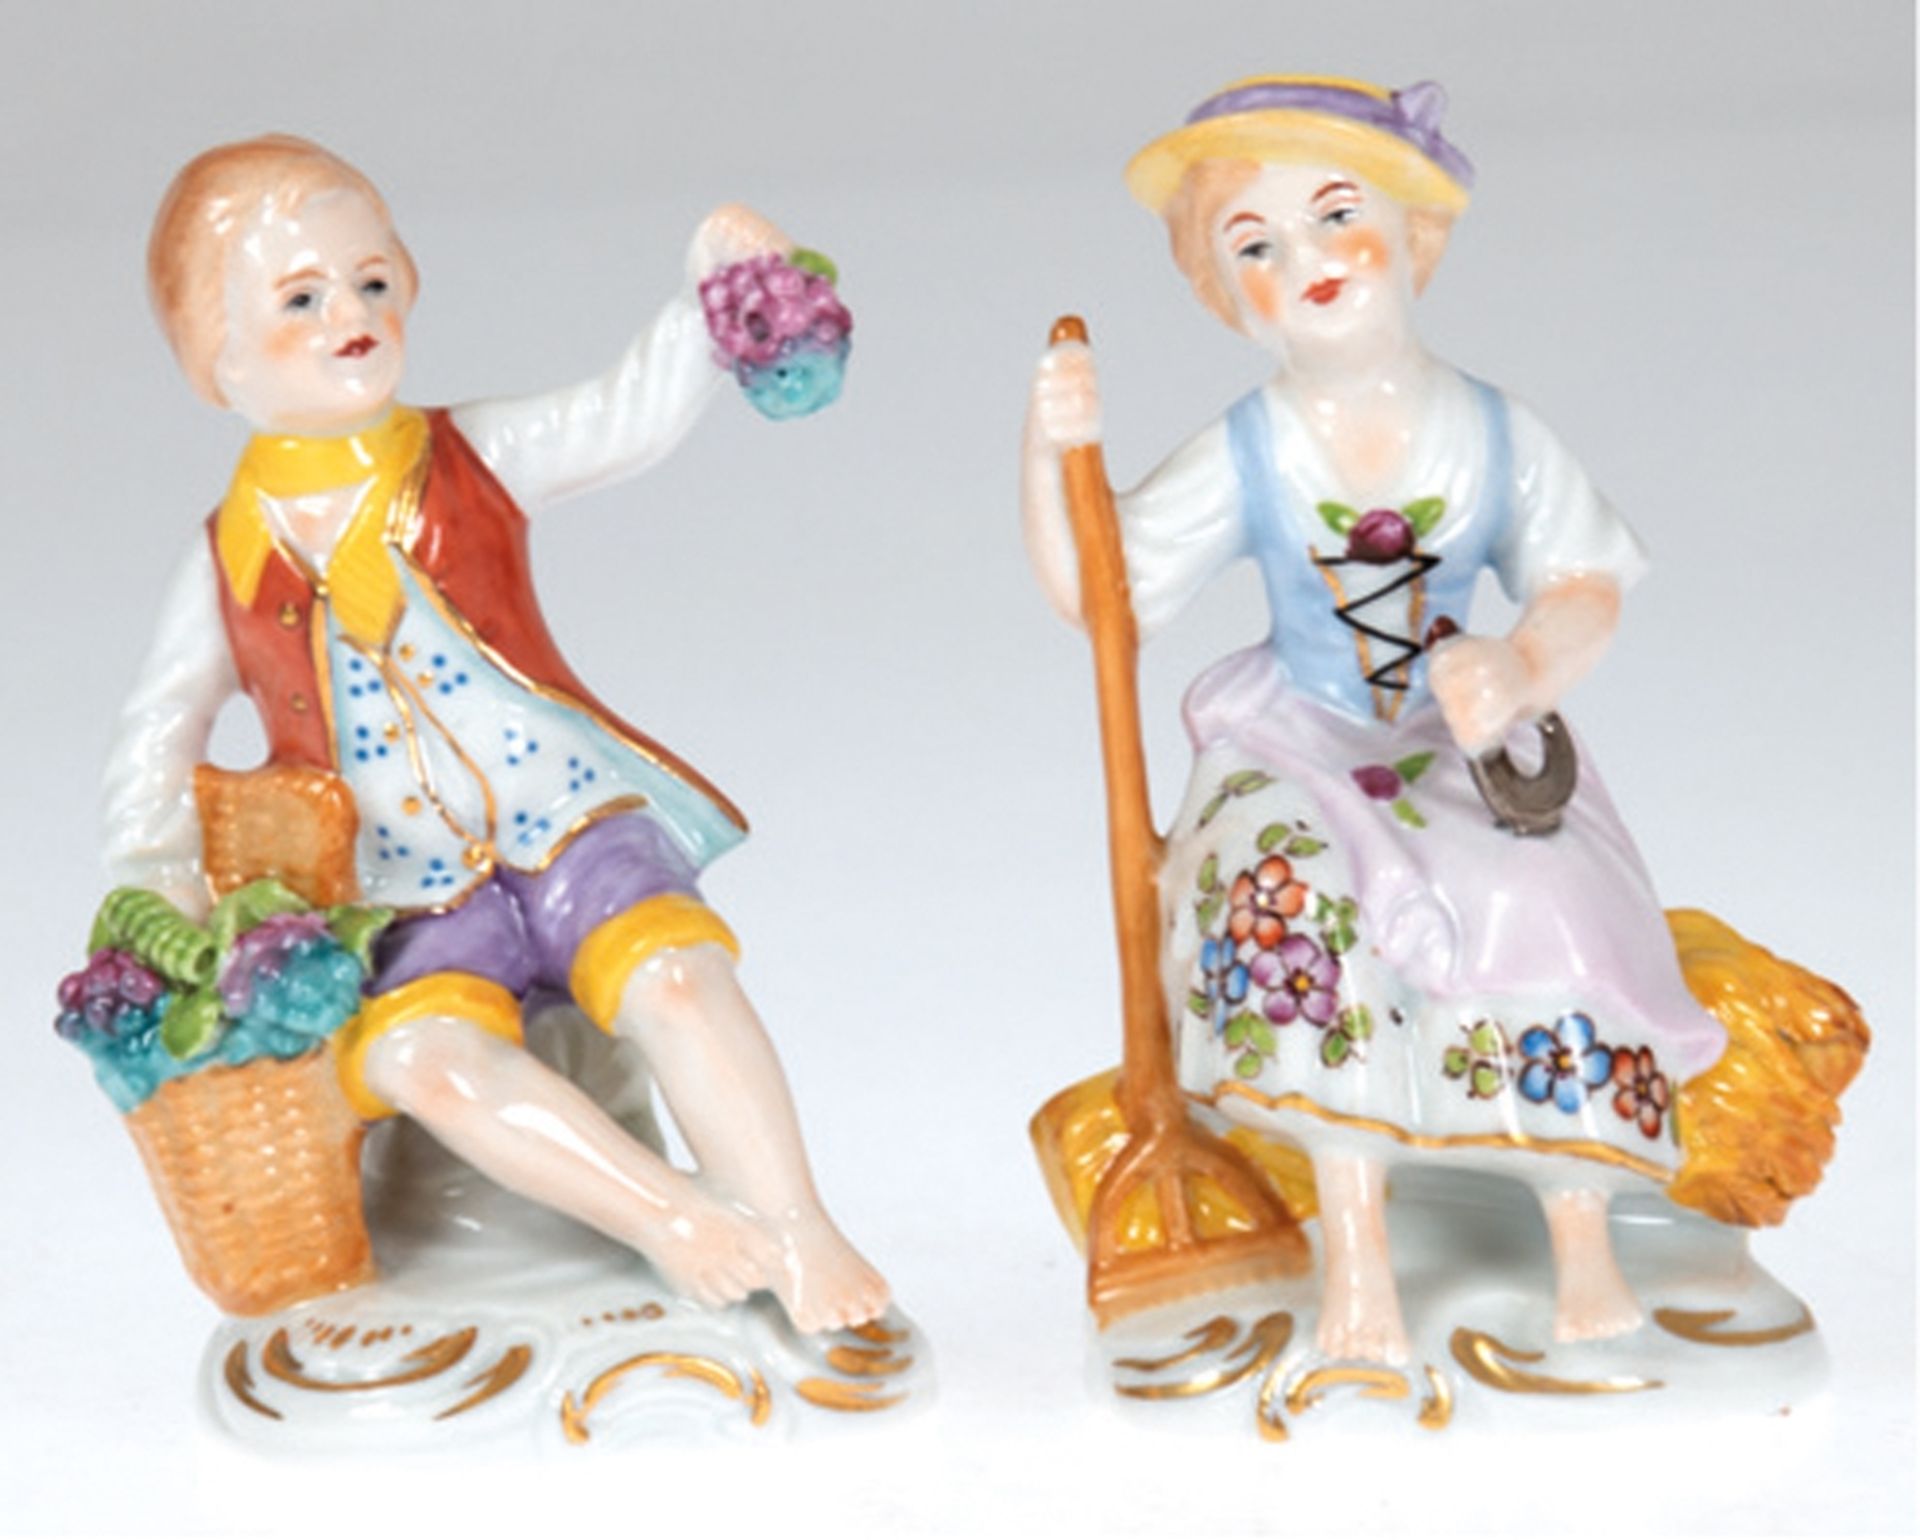 2 Porzellanfiguren "Gärtnerkinder", Sitzendorf, polychrome Bemalung, H. 9 cm